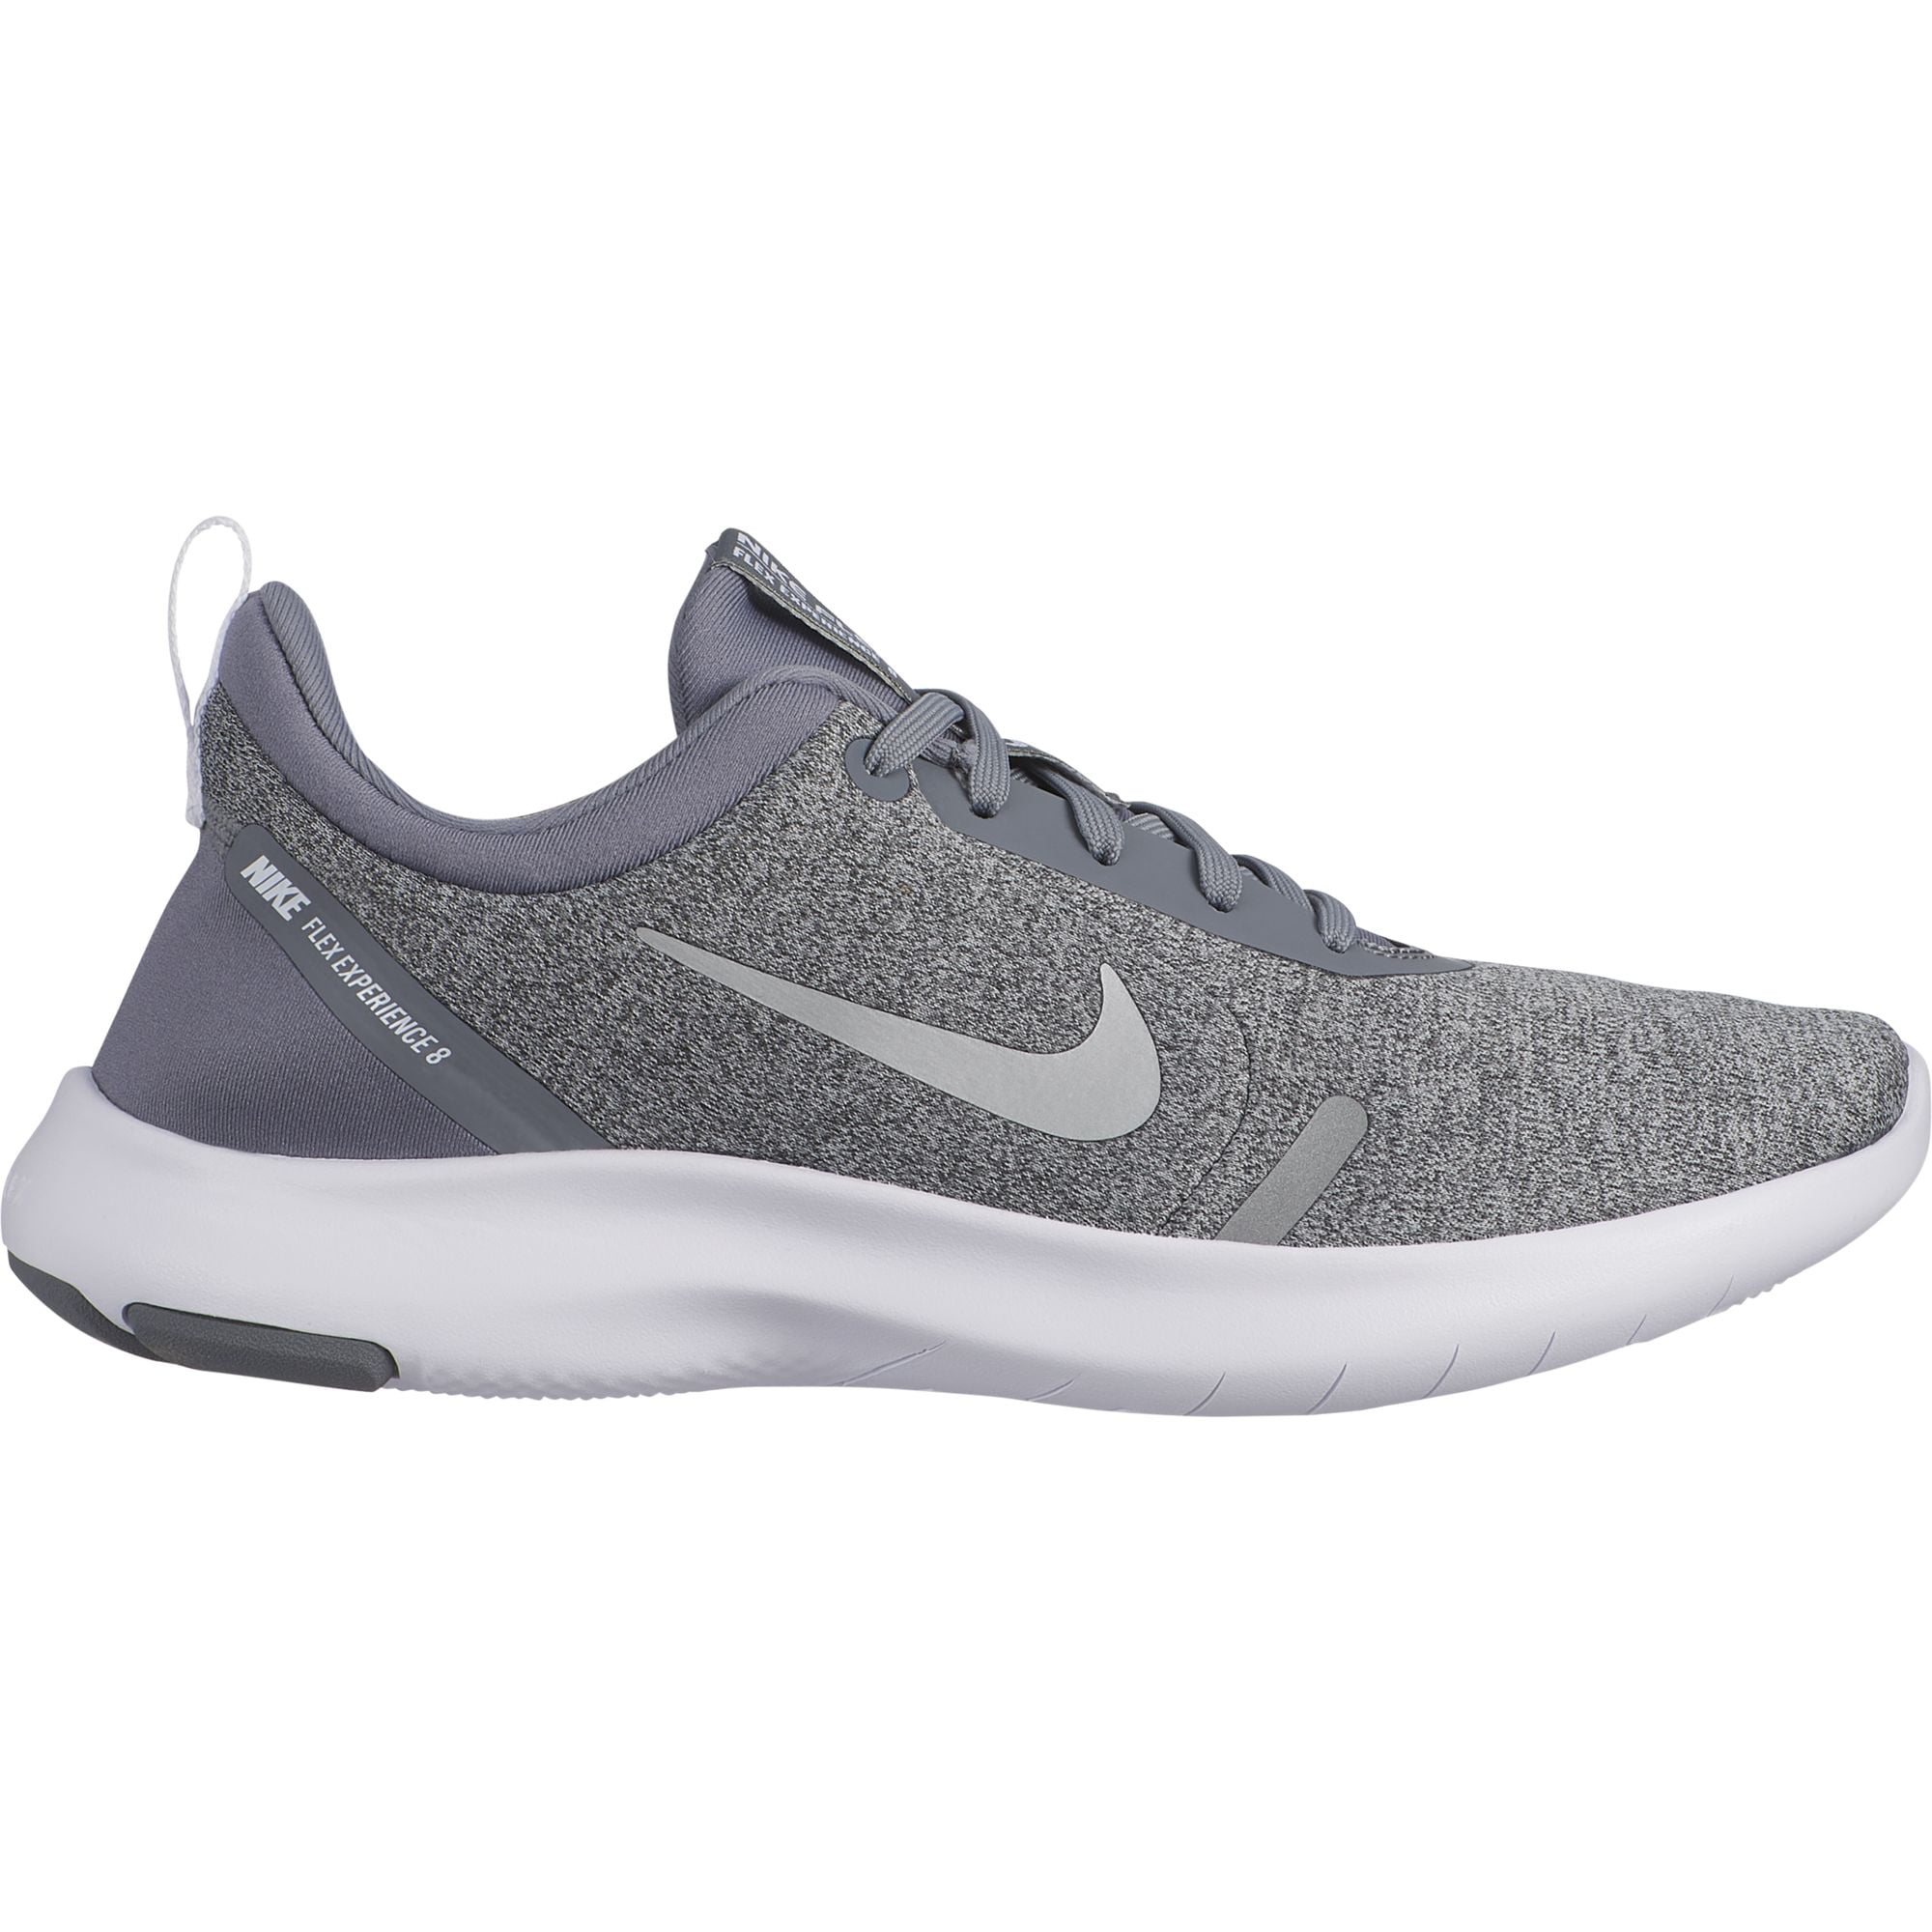 Women's Nike Flex Experience RN 8 Shoe Cool Silver/Anthracite Walmart.com